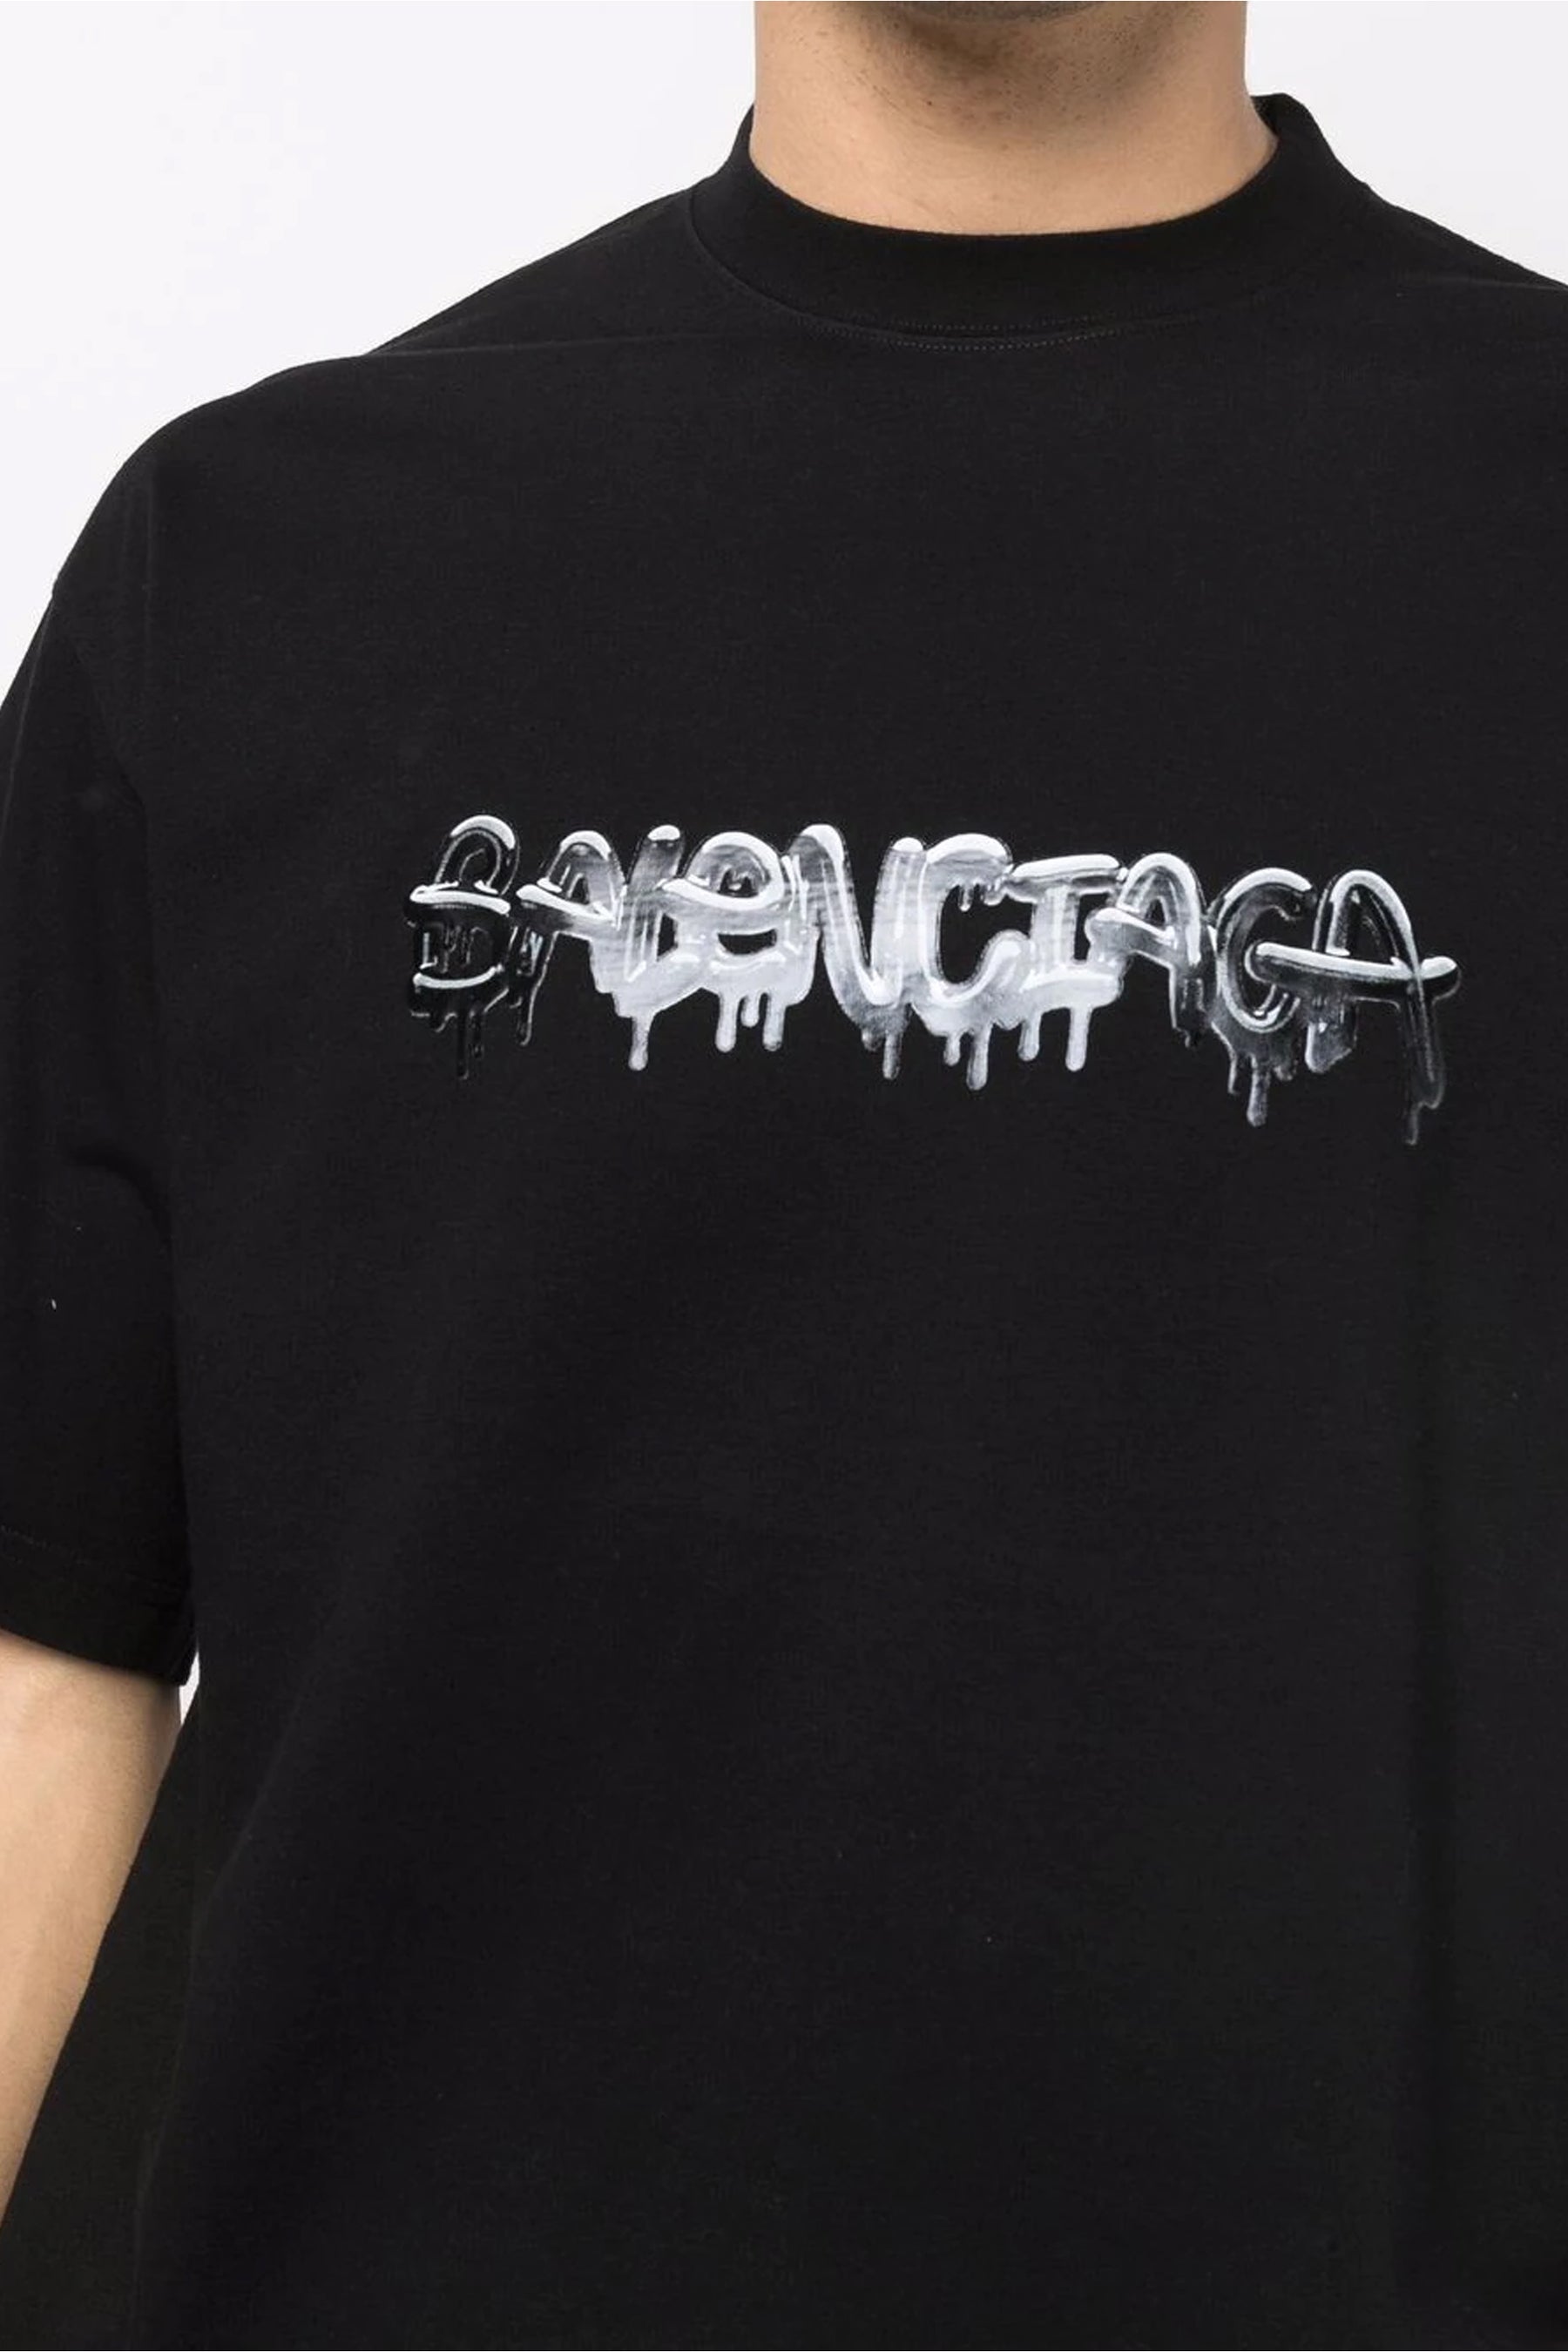 Balenciaga black graffiti-print cotton T-shirt